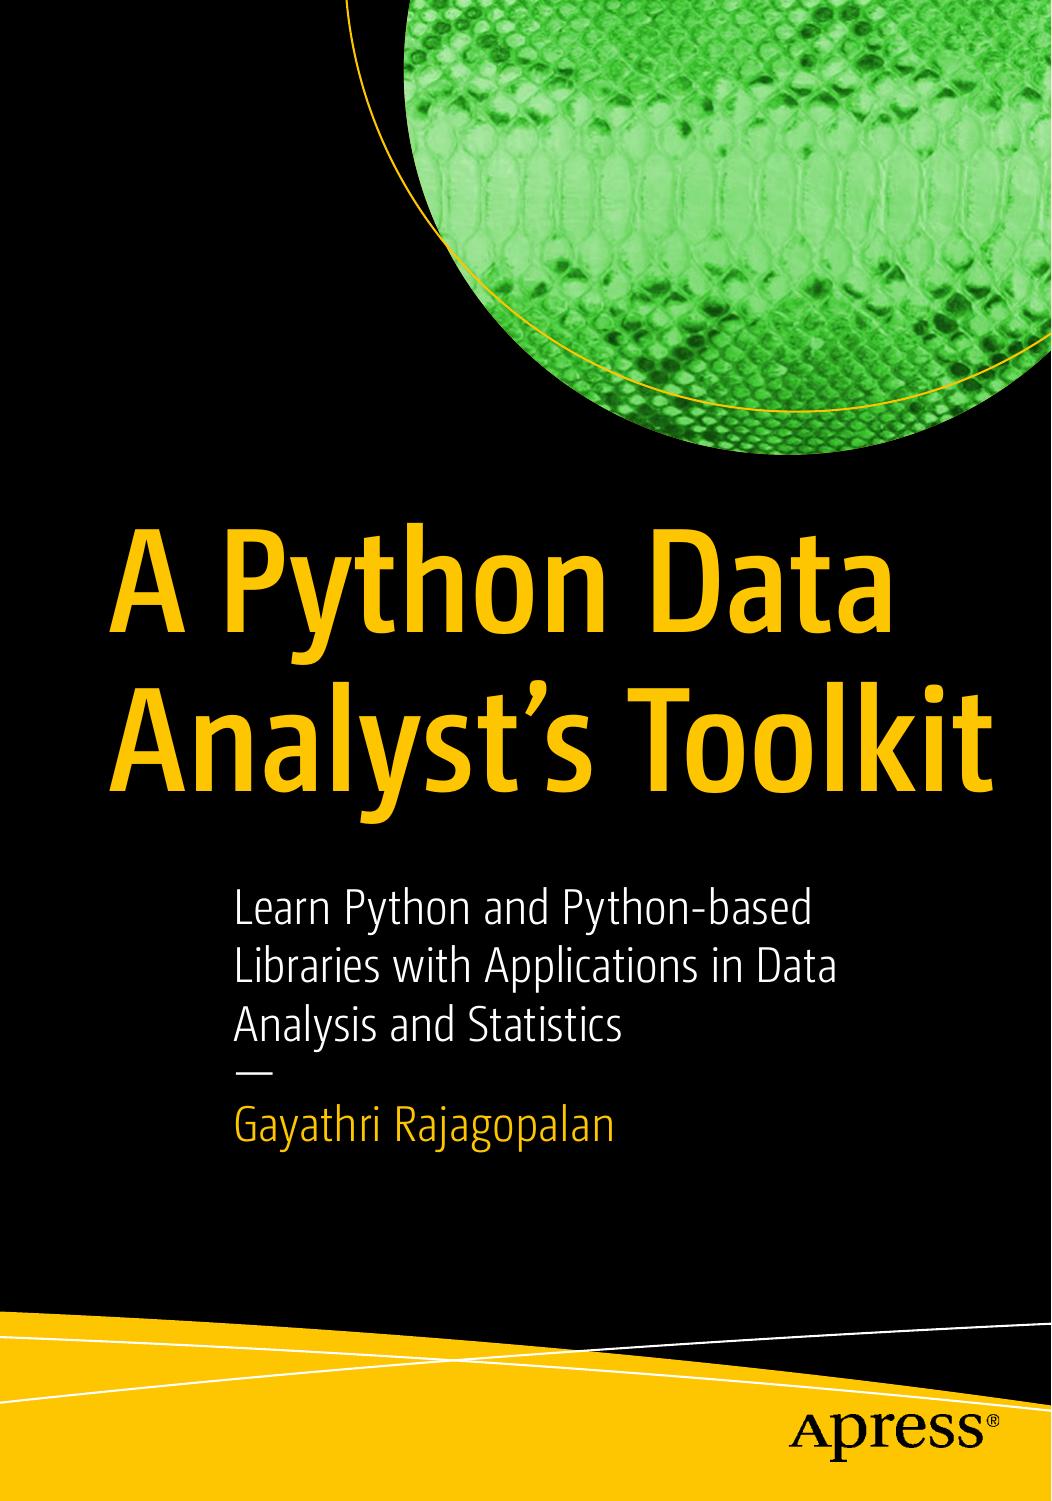 A Python Data Analyst’s Toolkit